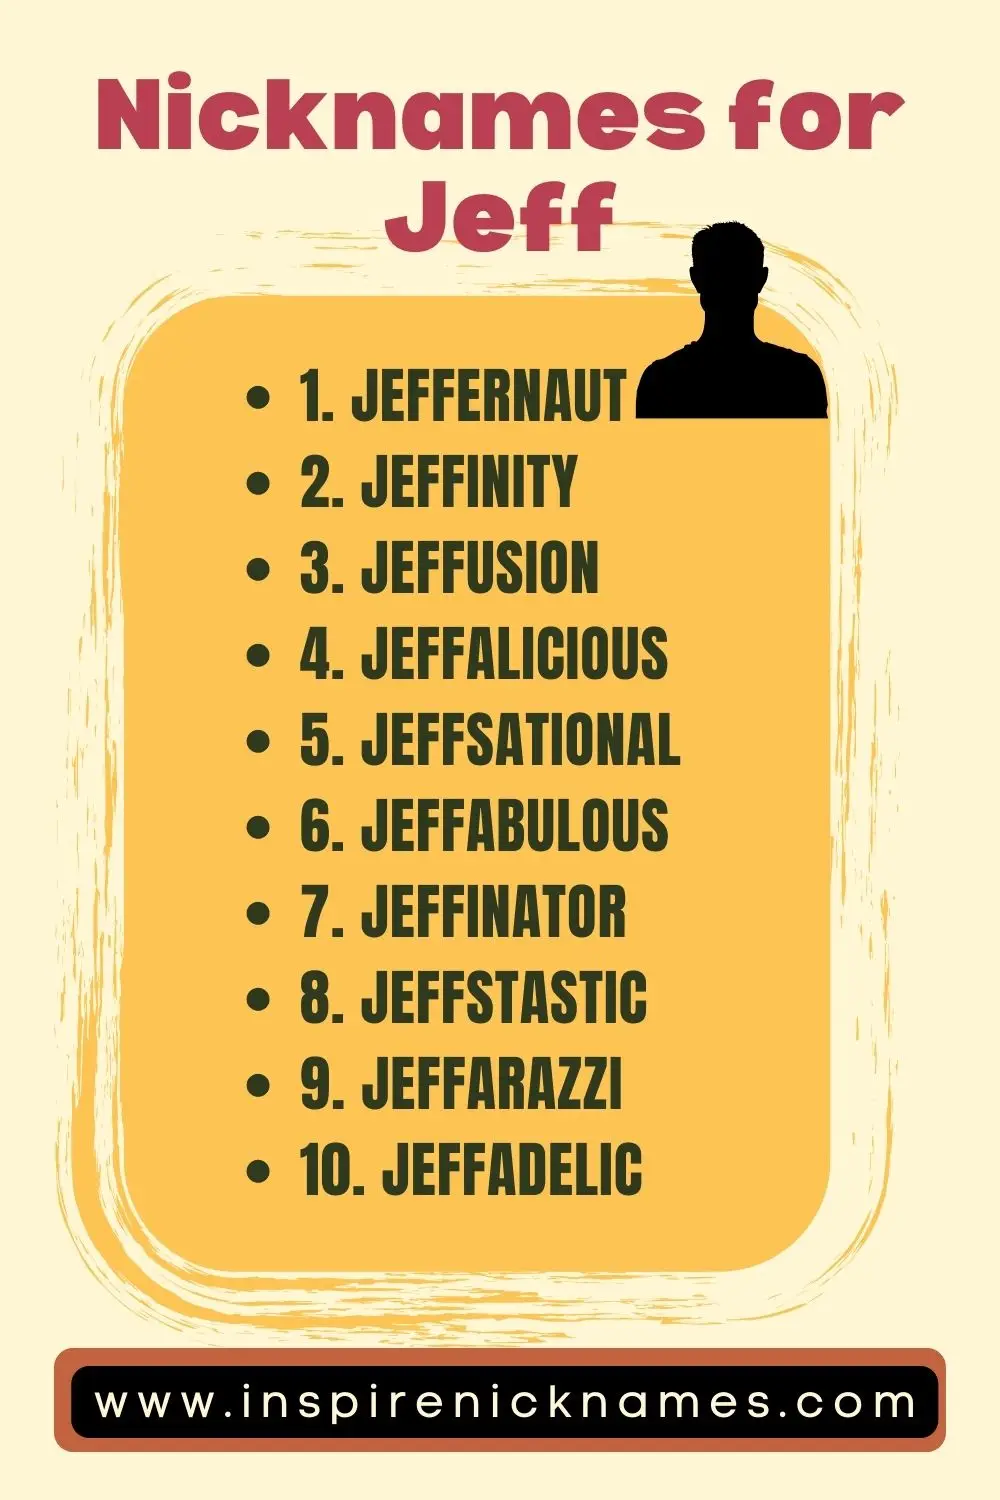 nicknames for Jeff